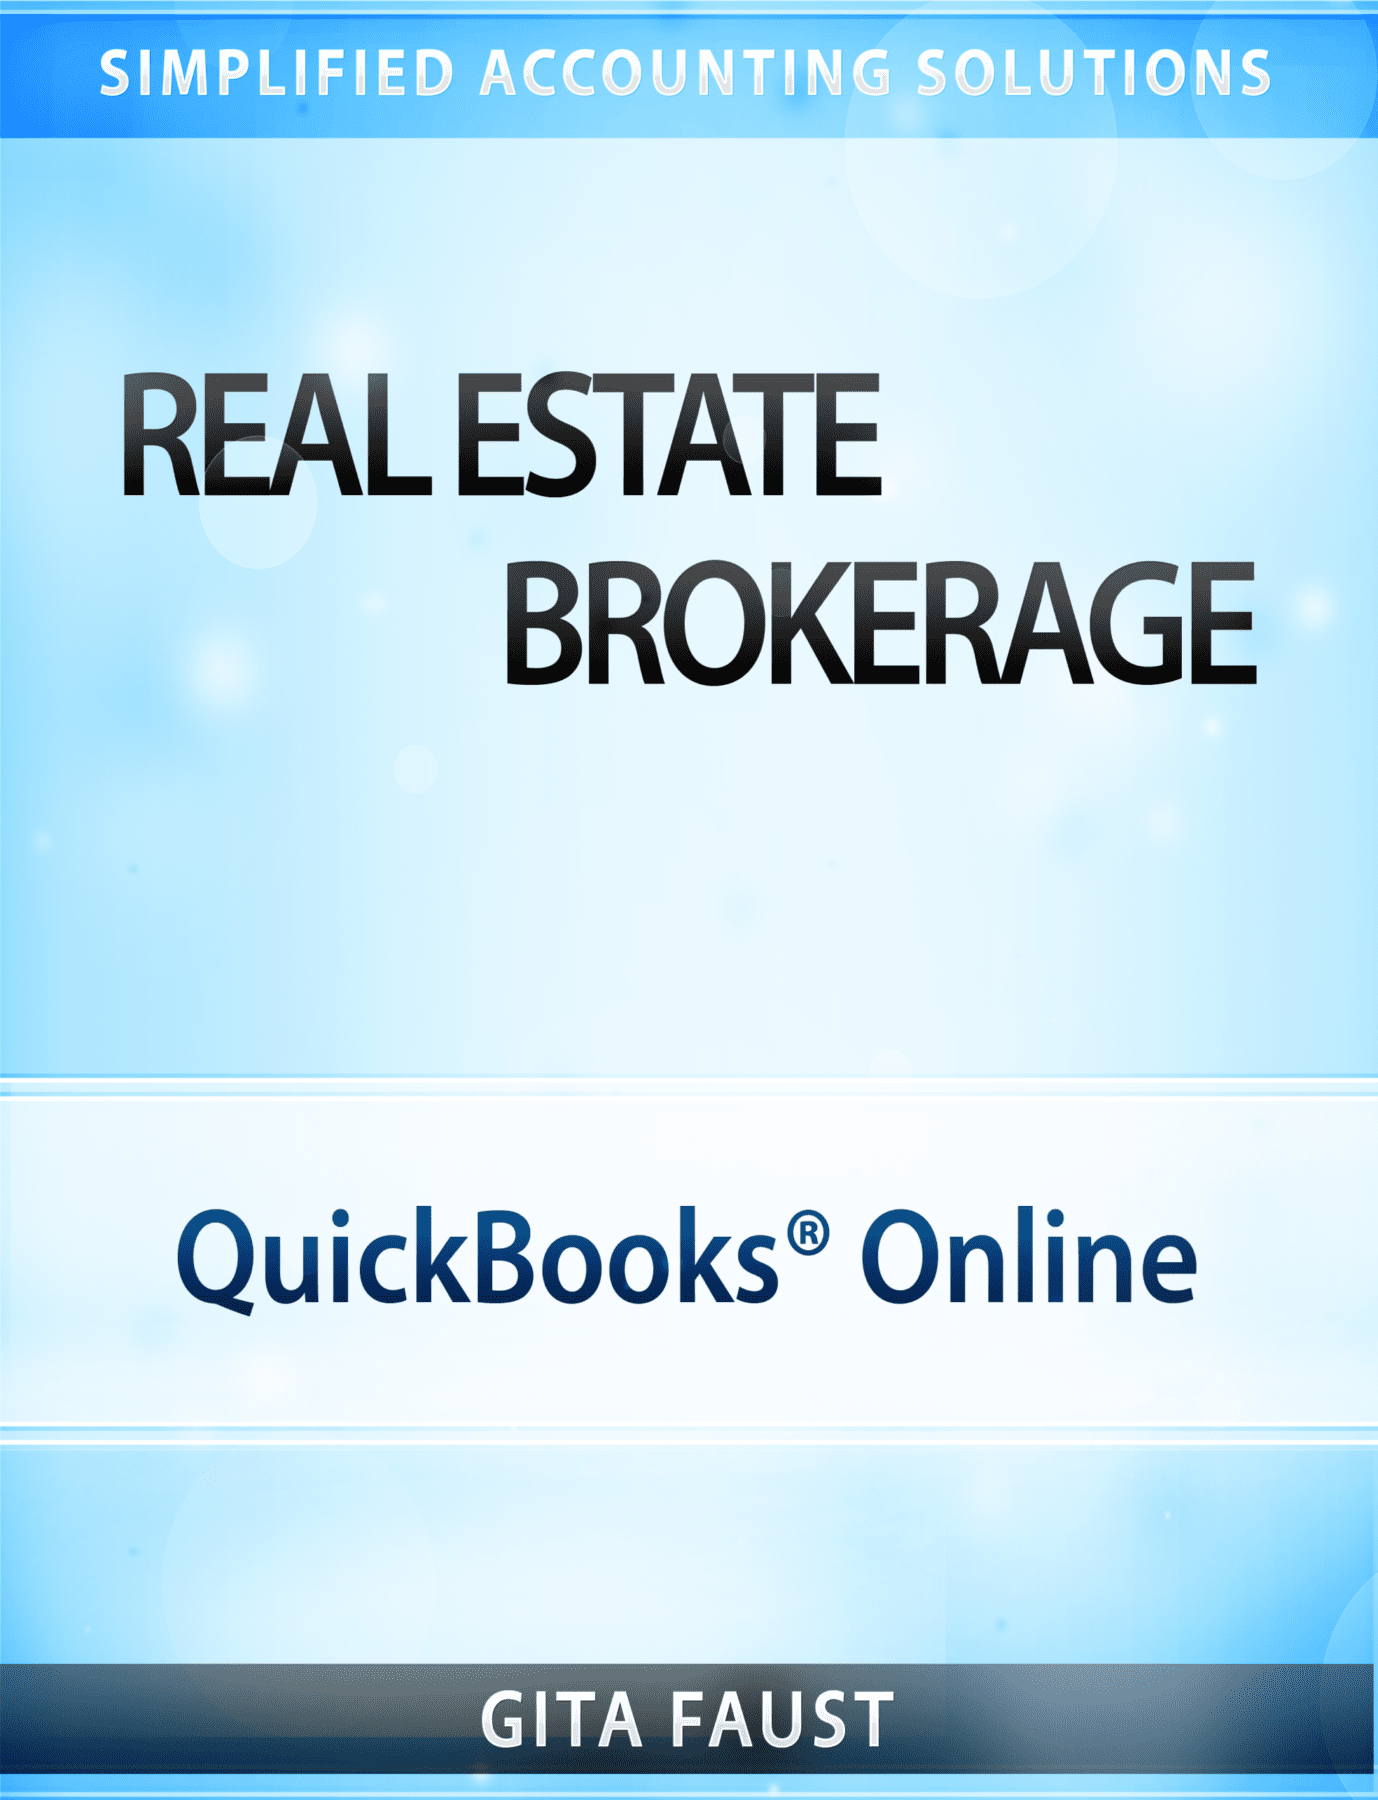 QuickBooks Online for Real Estate Broker